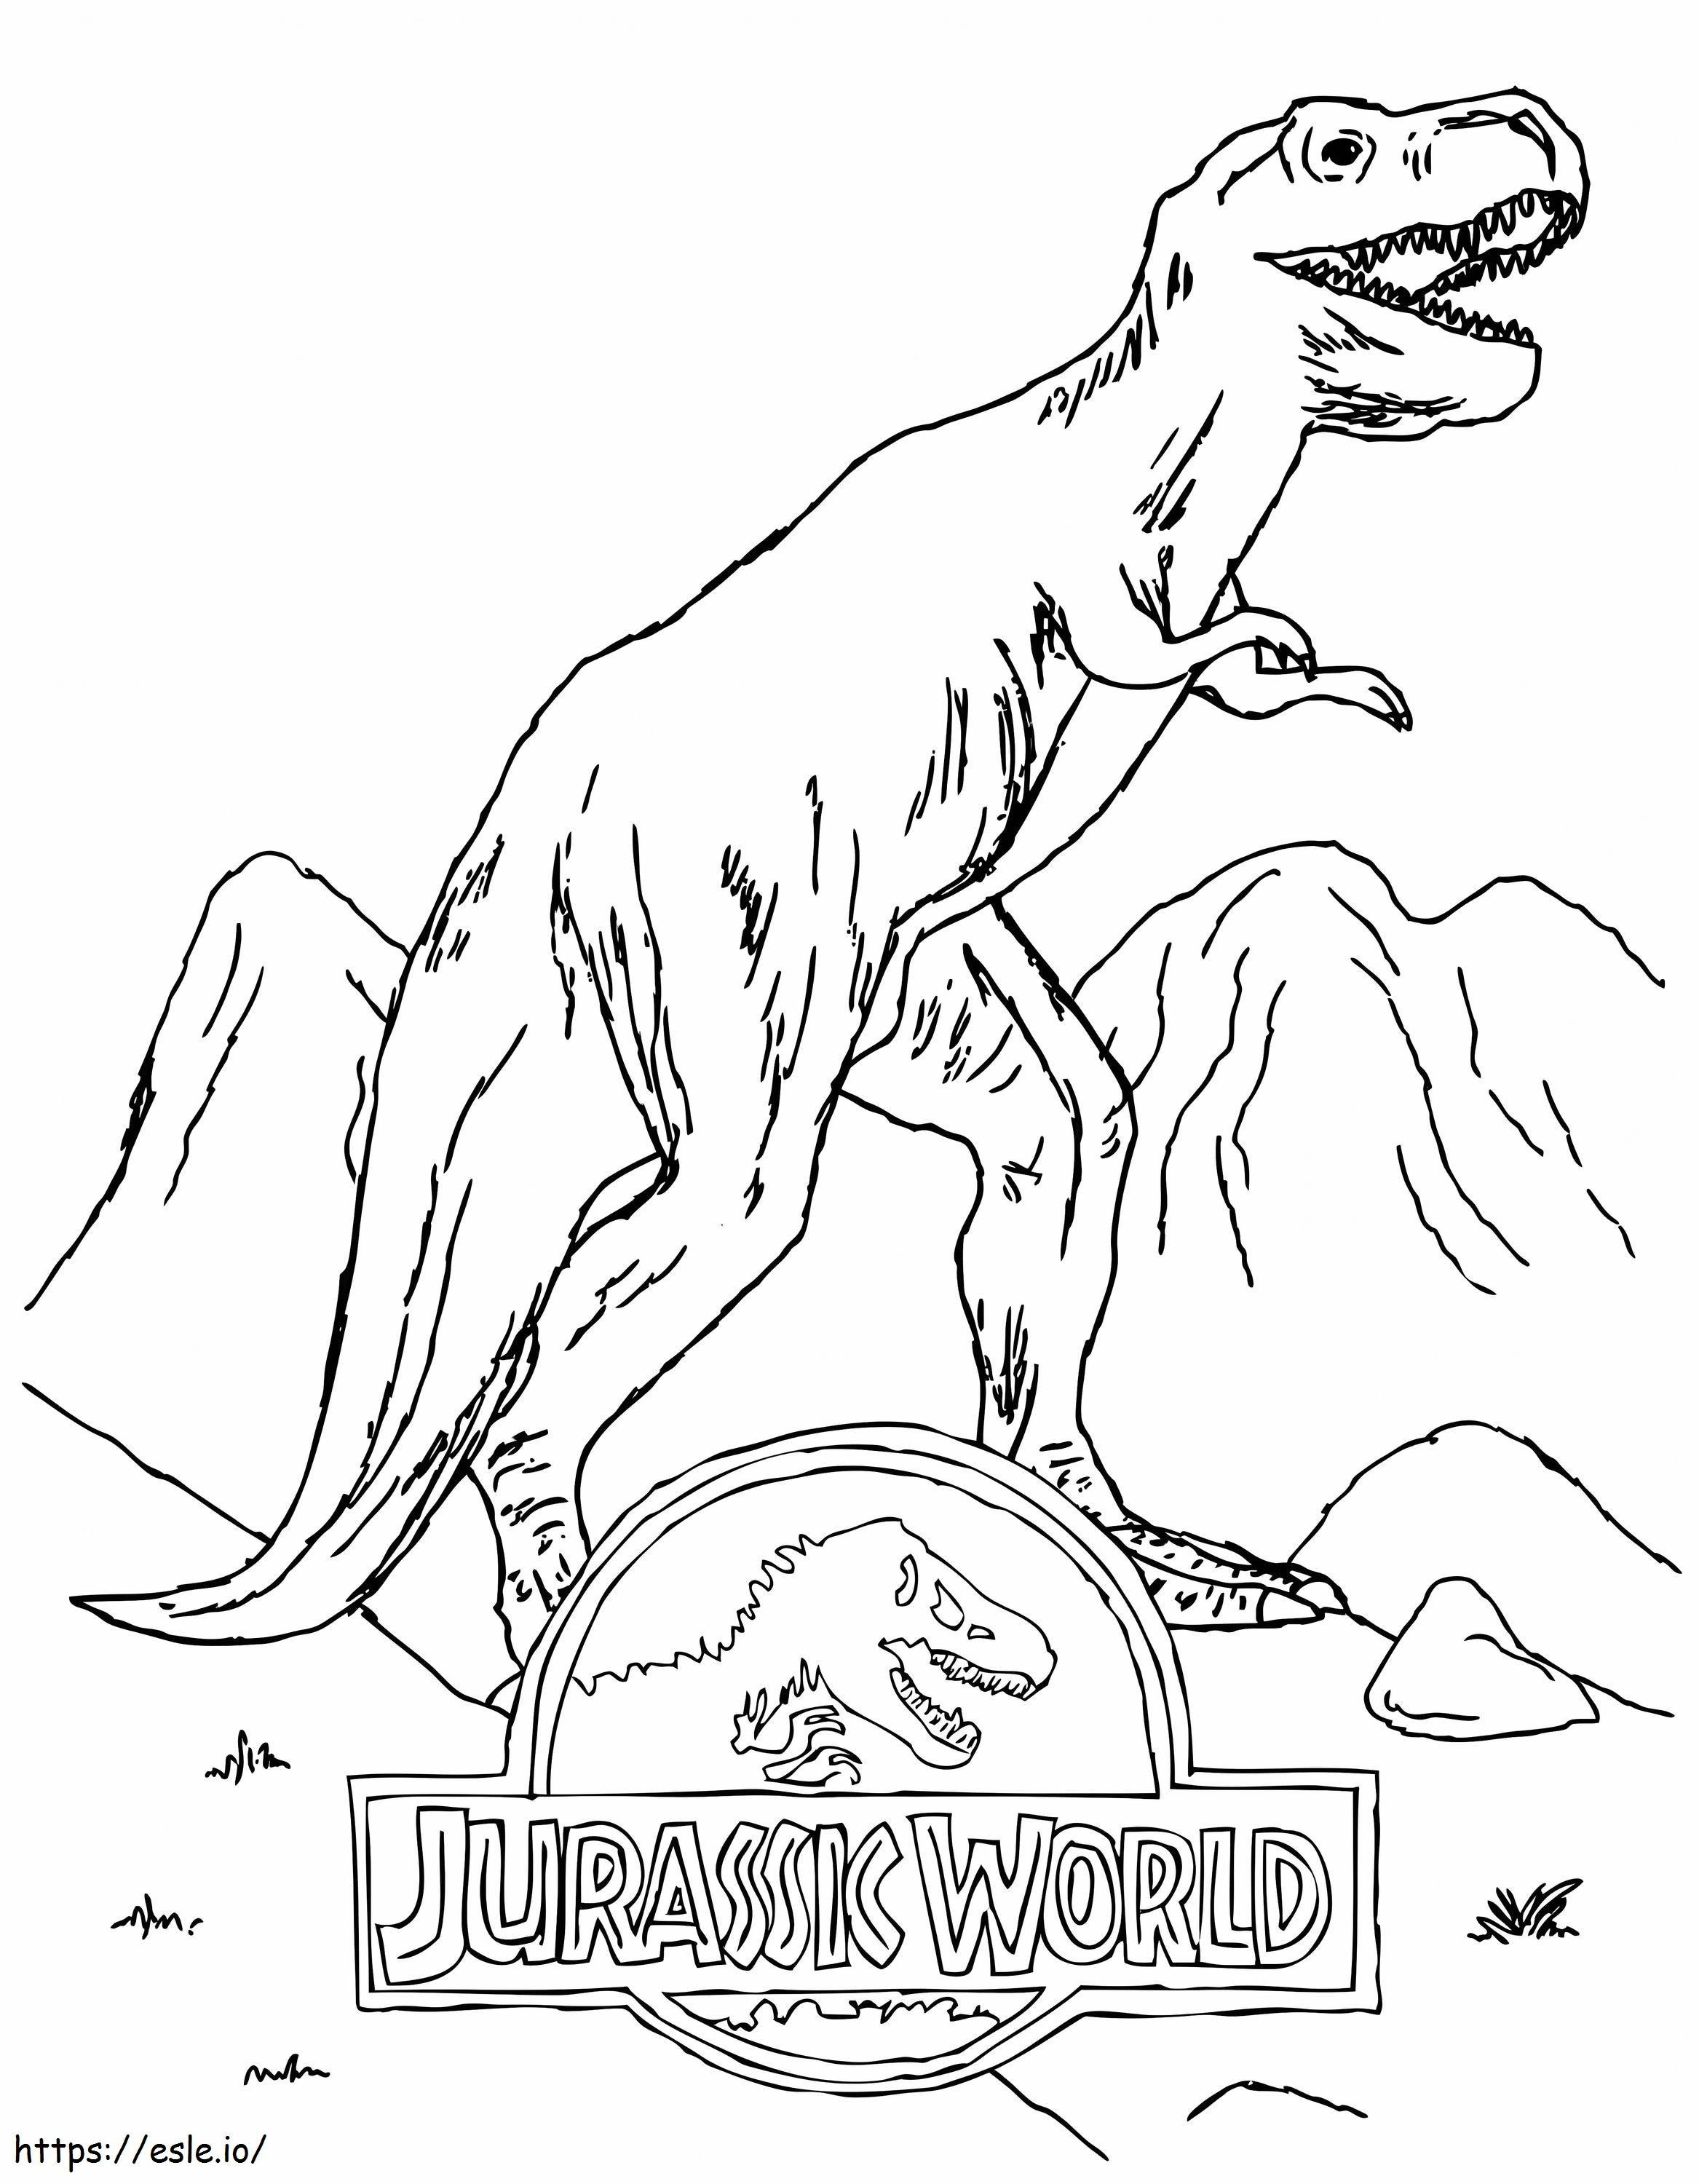 Logotipo do Jurassic World com T Rex para colorir